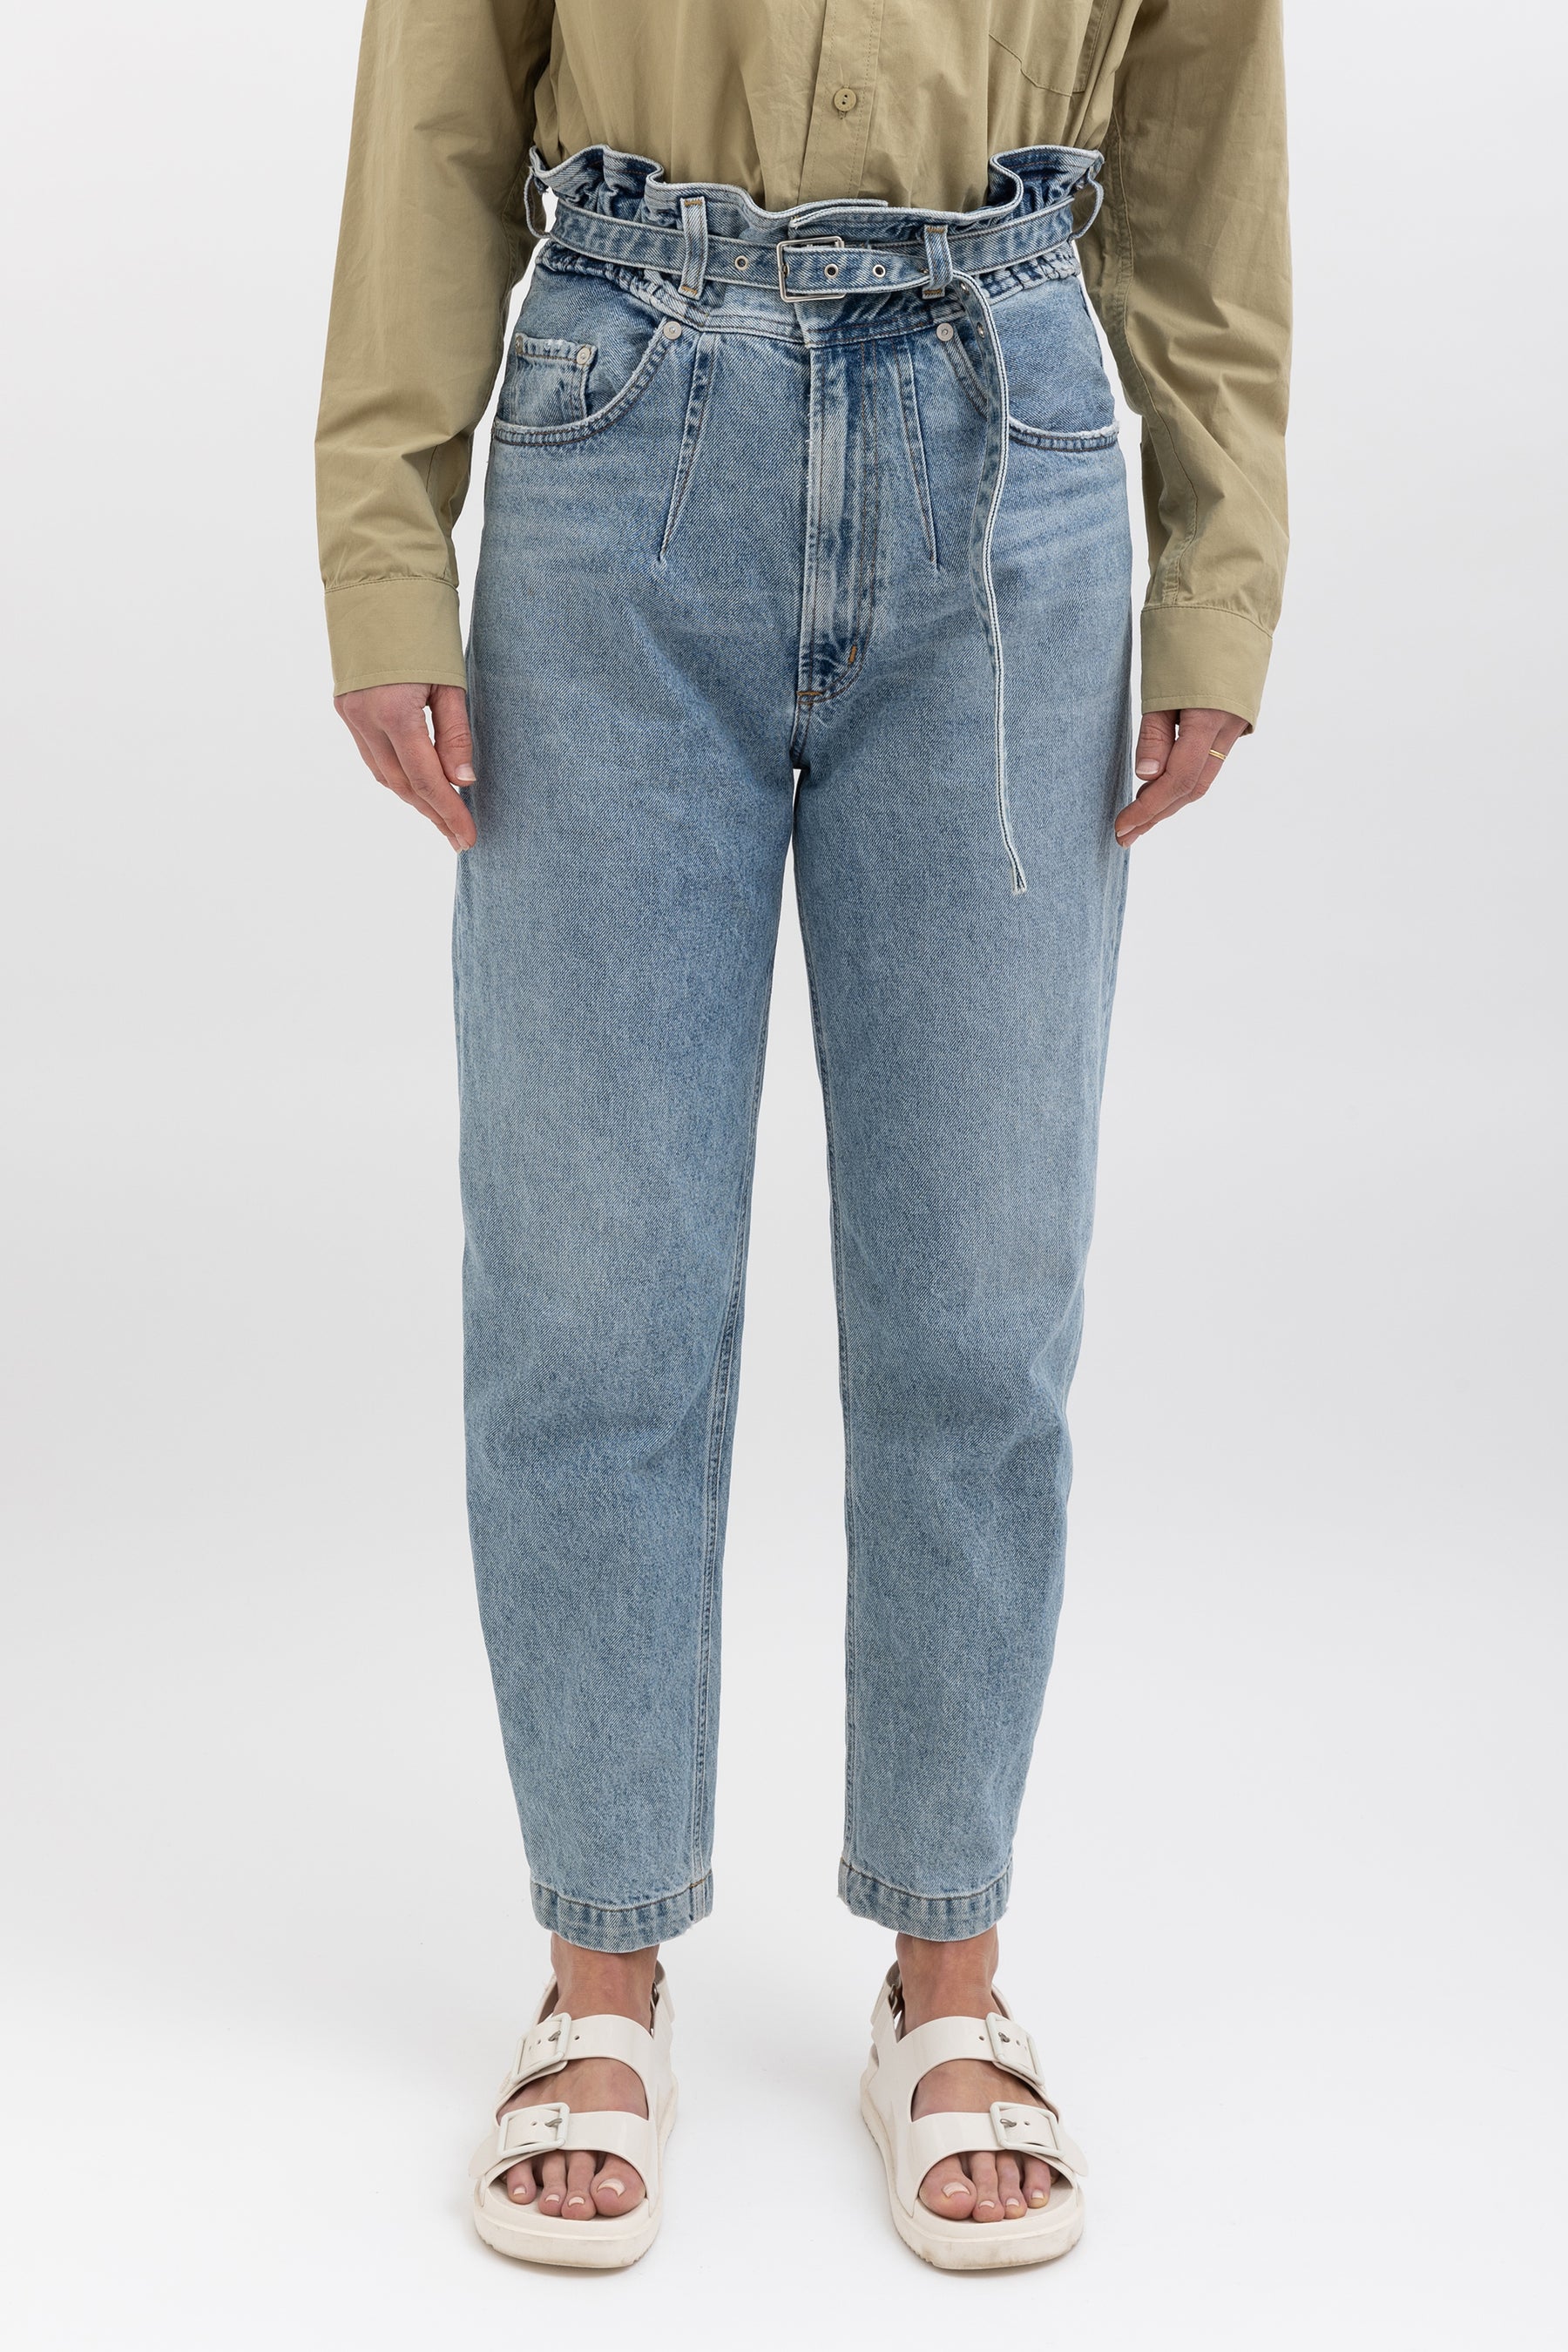 90s Paperbag Jeans